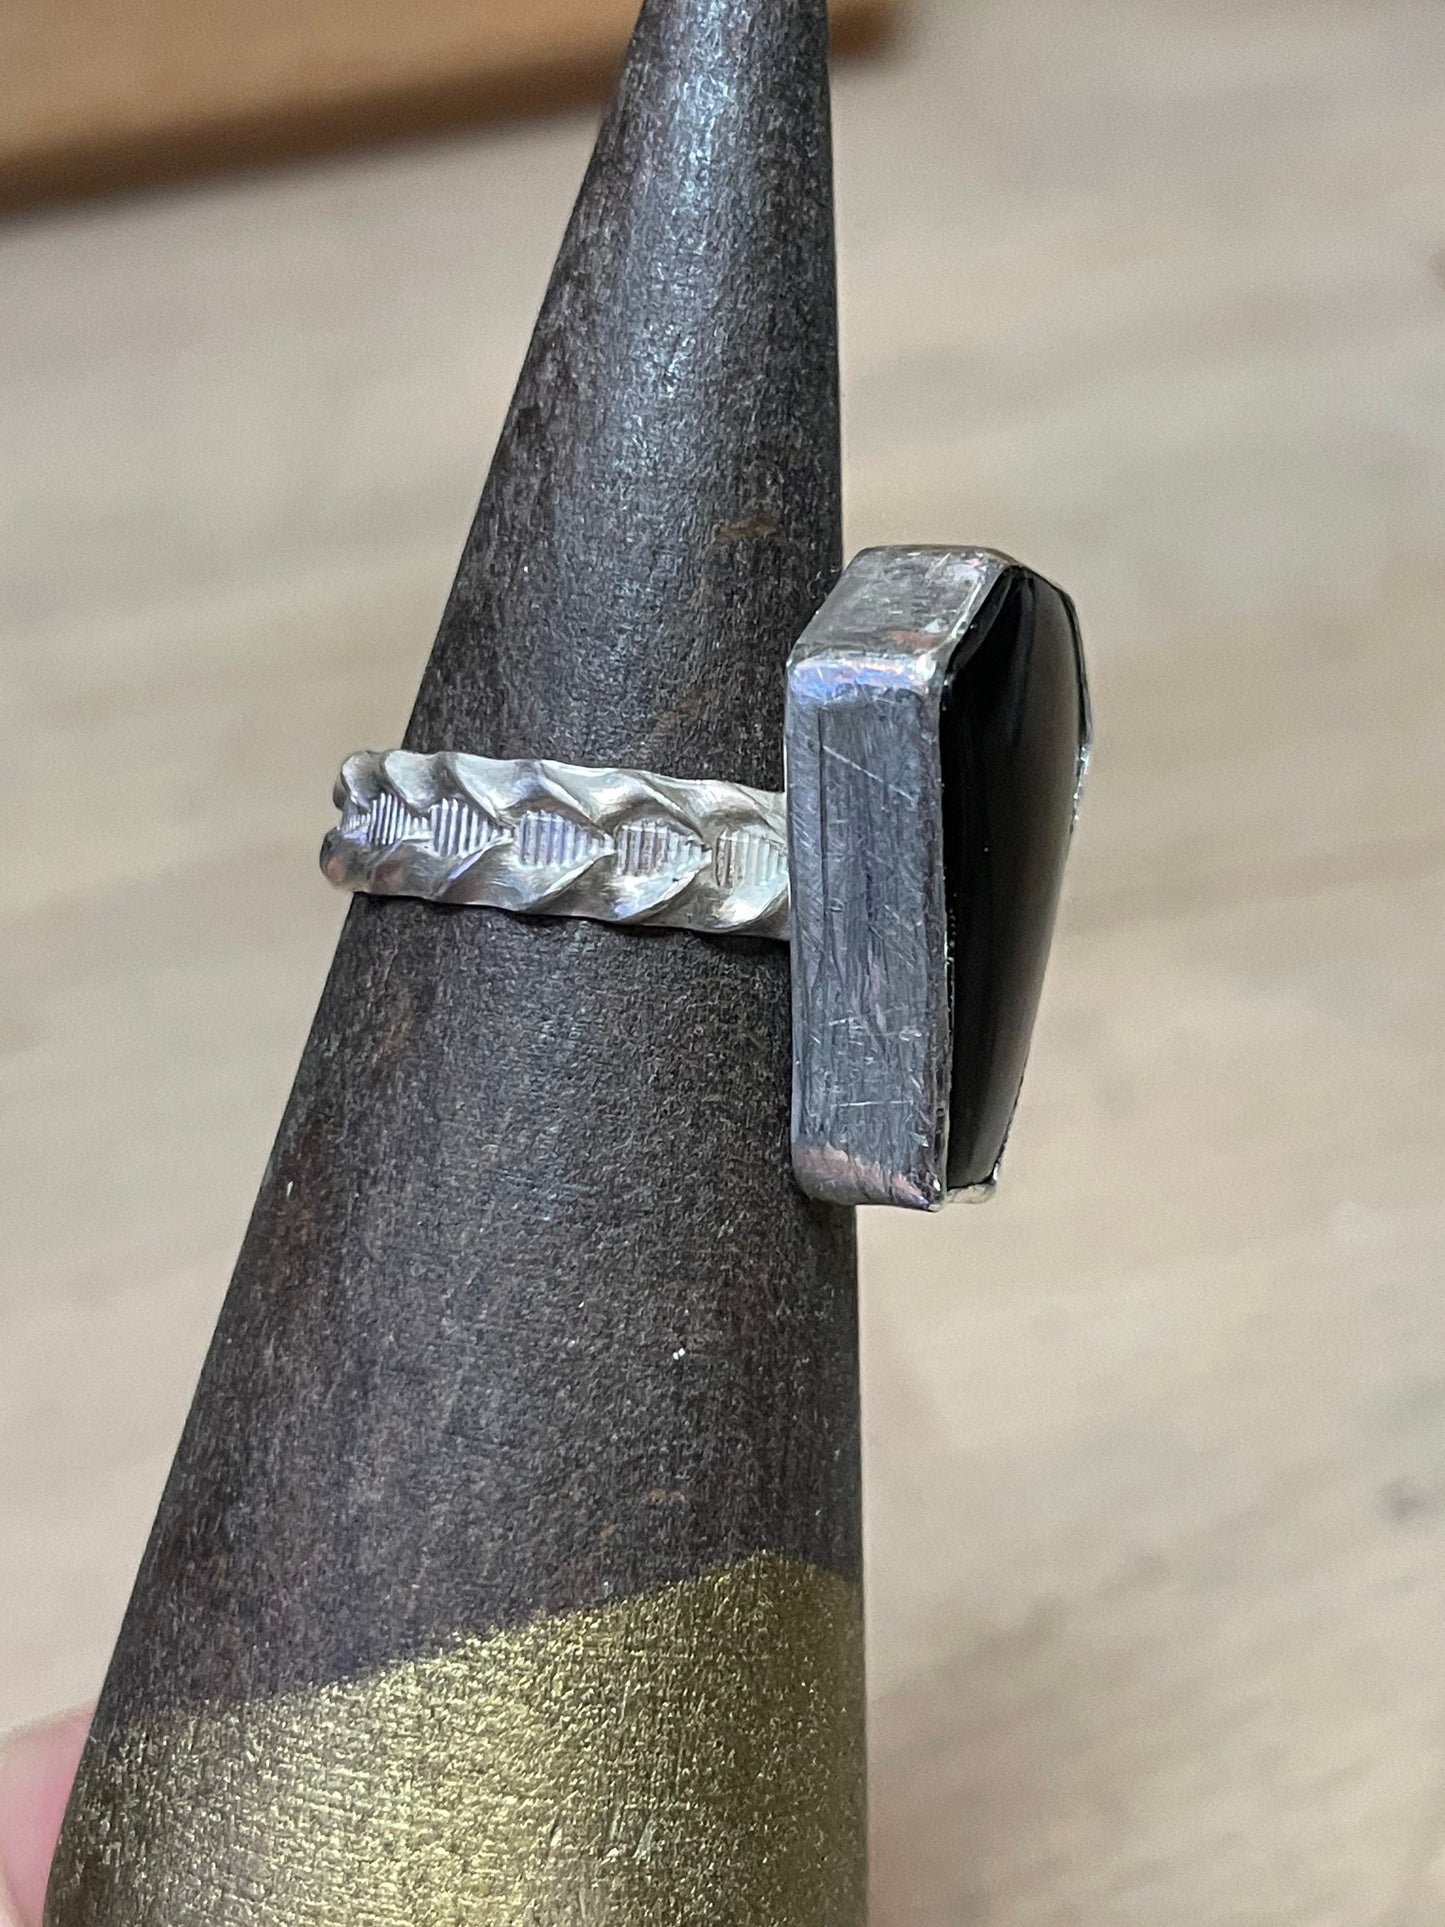 Onyx Coffin Cut Gemstone in Sterling Silver Gothic Ring